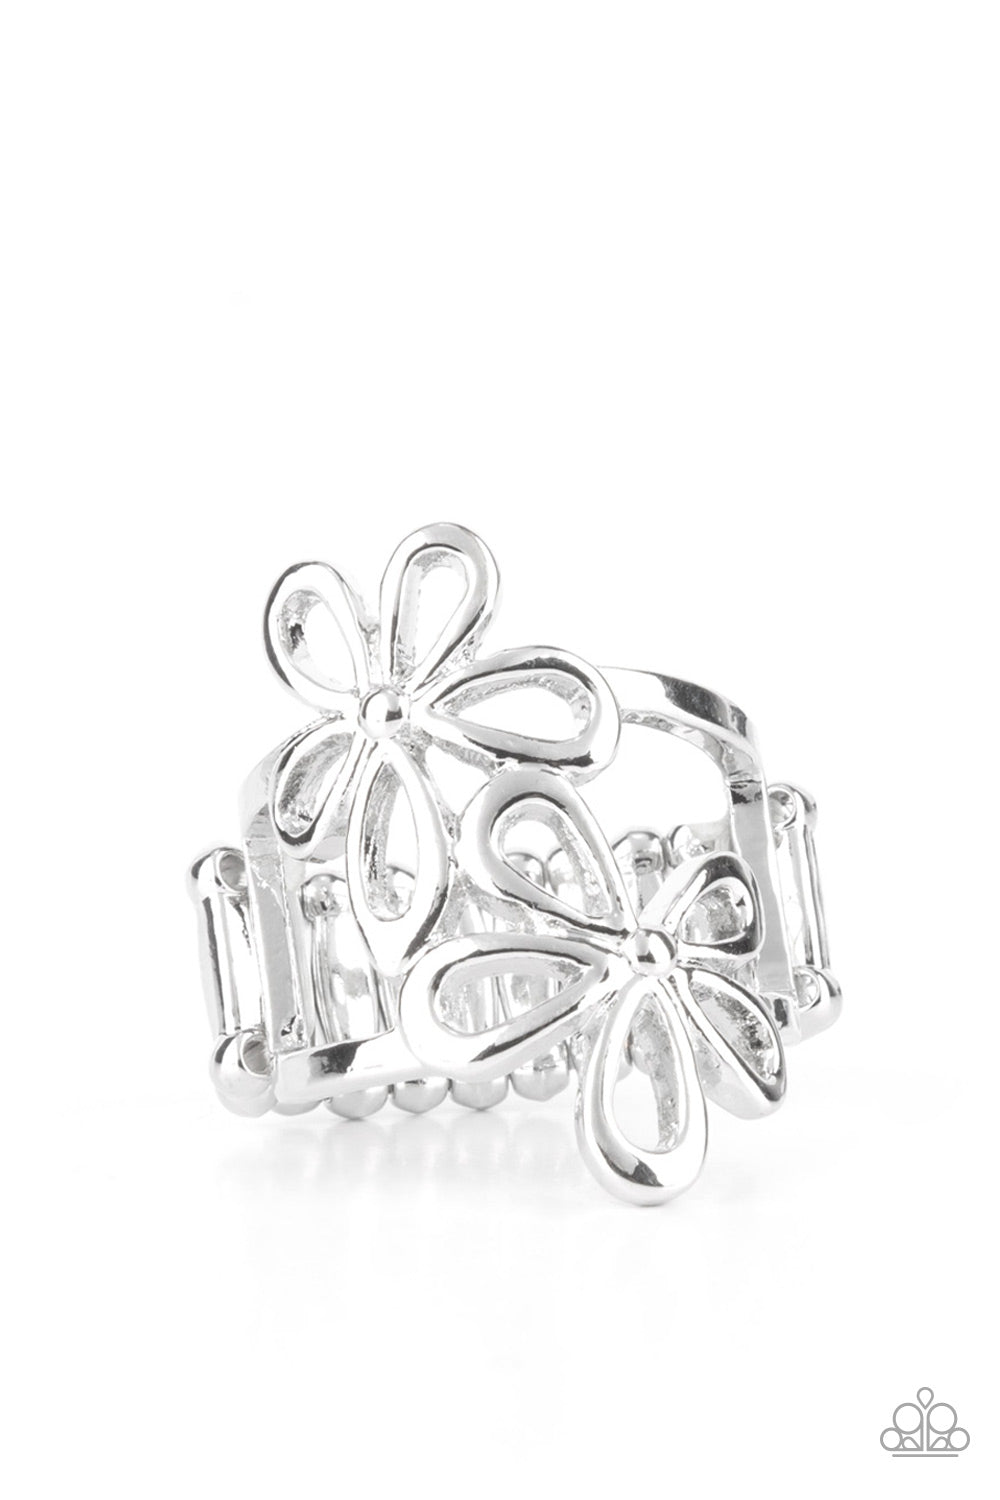 Perennial Pair - Silver Ring - Princess Glam Shop